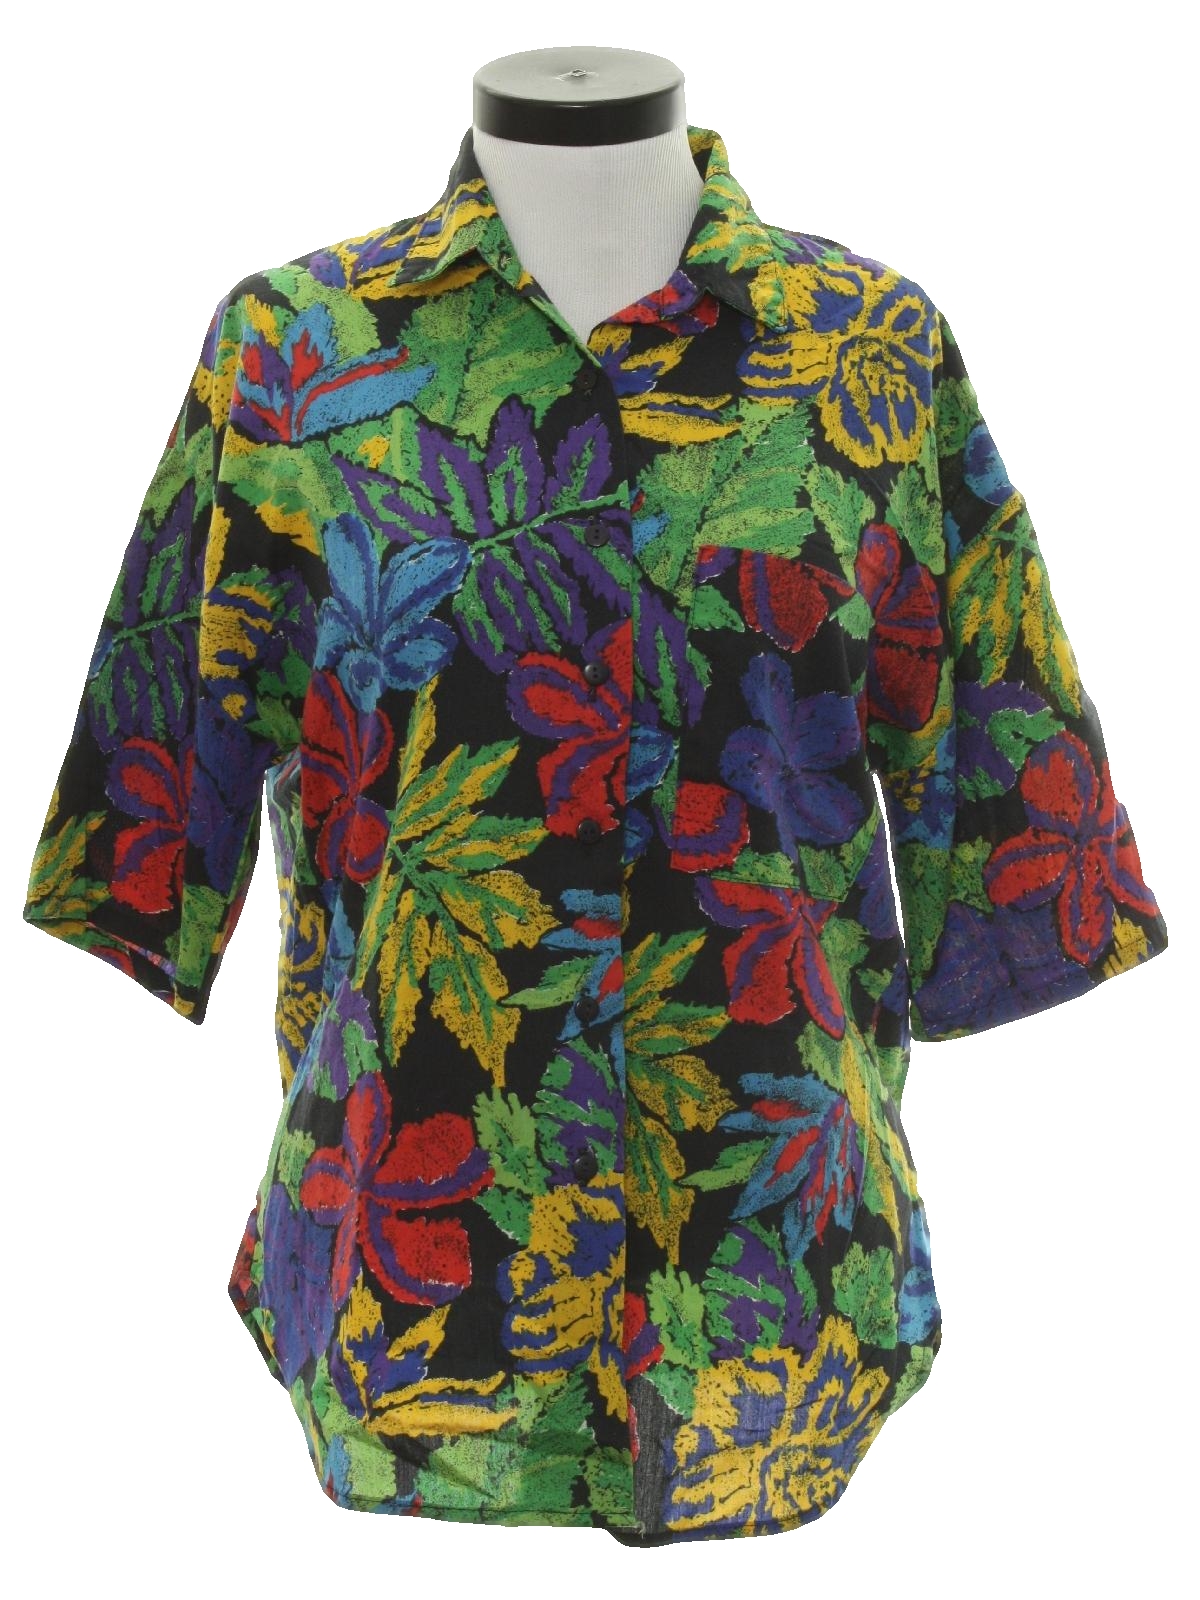 Retro 80's Hawaiian Shirt: 80s -no label- Womens black background rayon ...